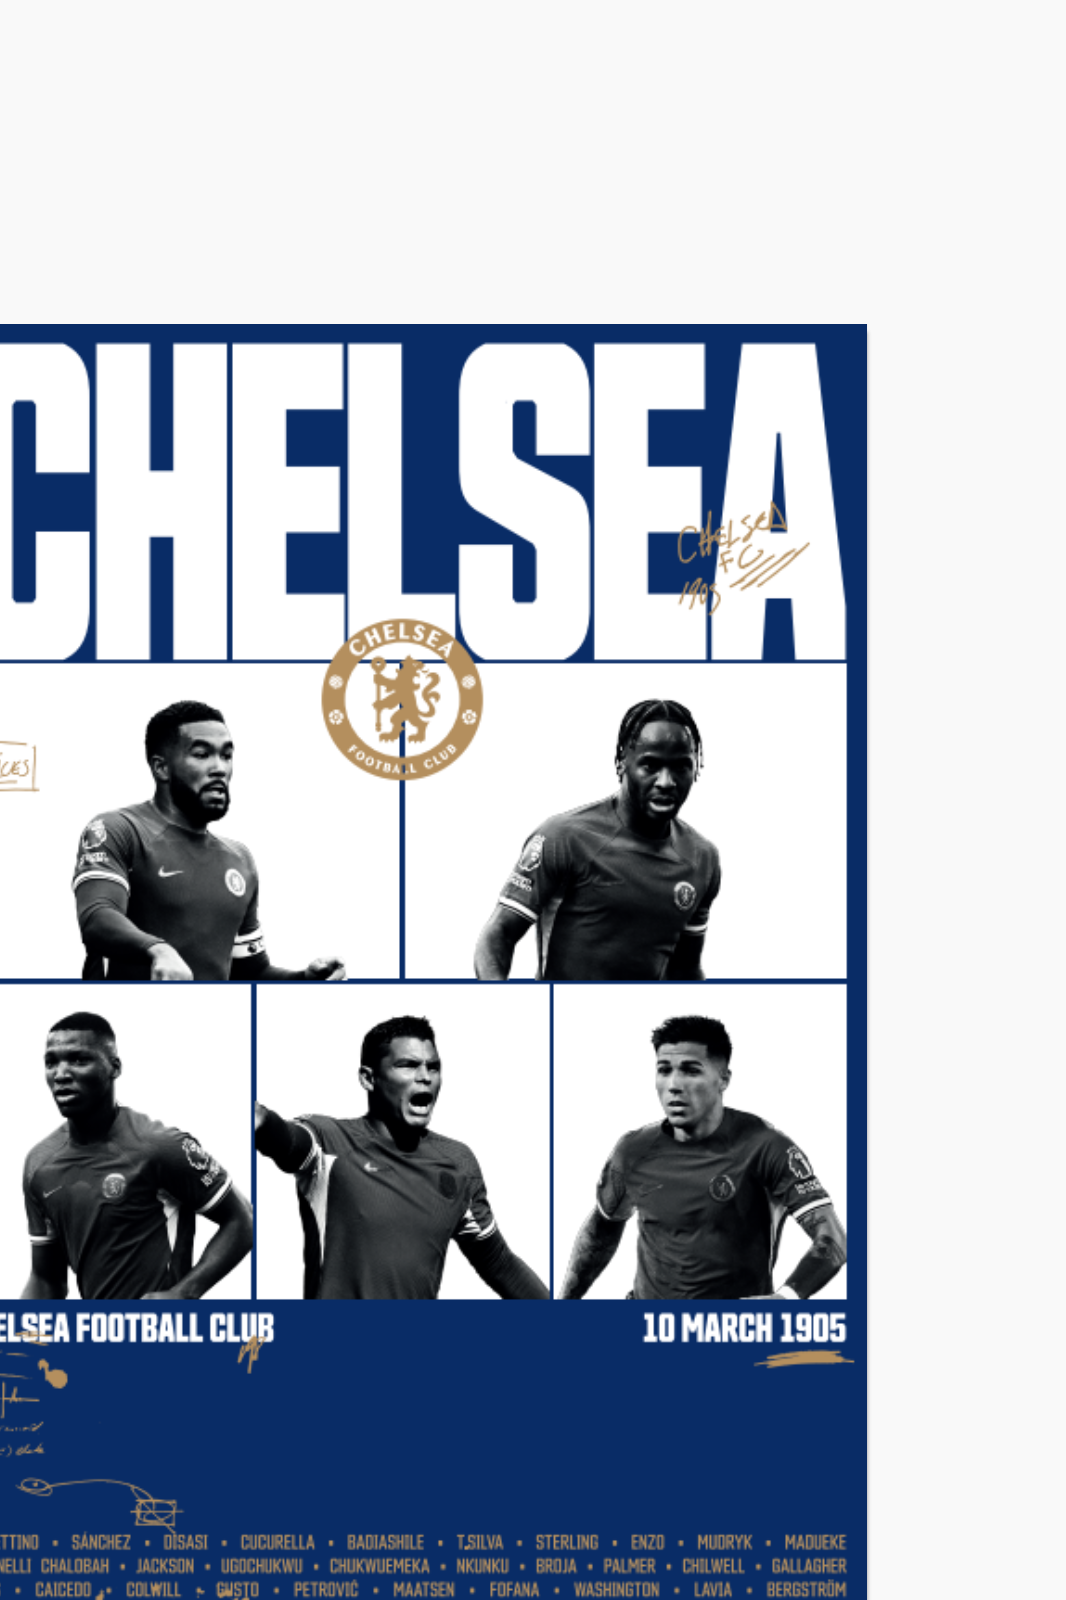 Chelsea FC - Print colecionable Azul 999 ejemplares